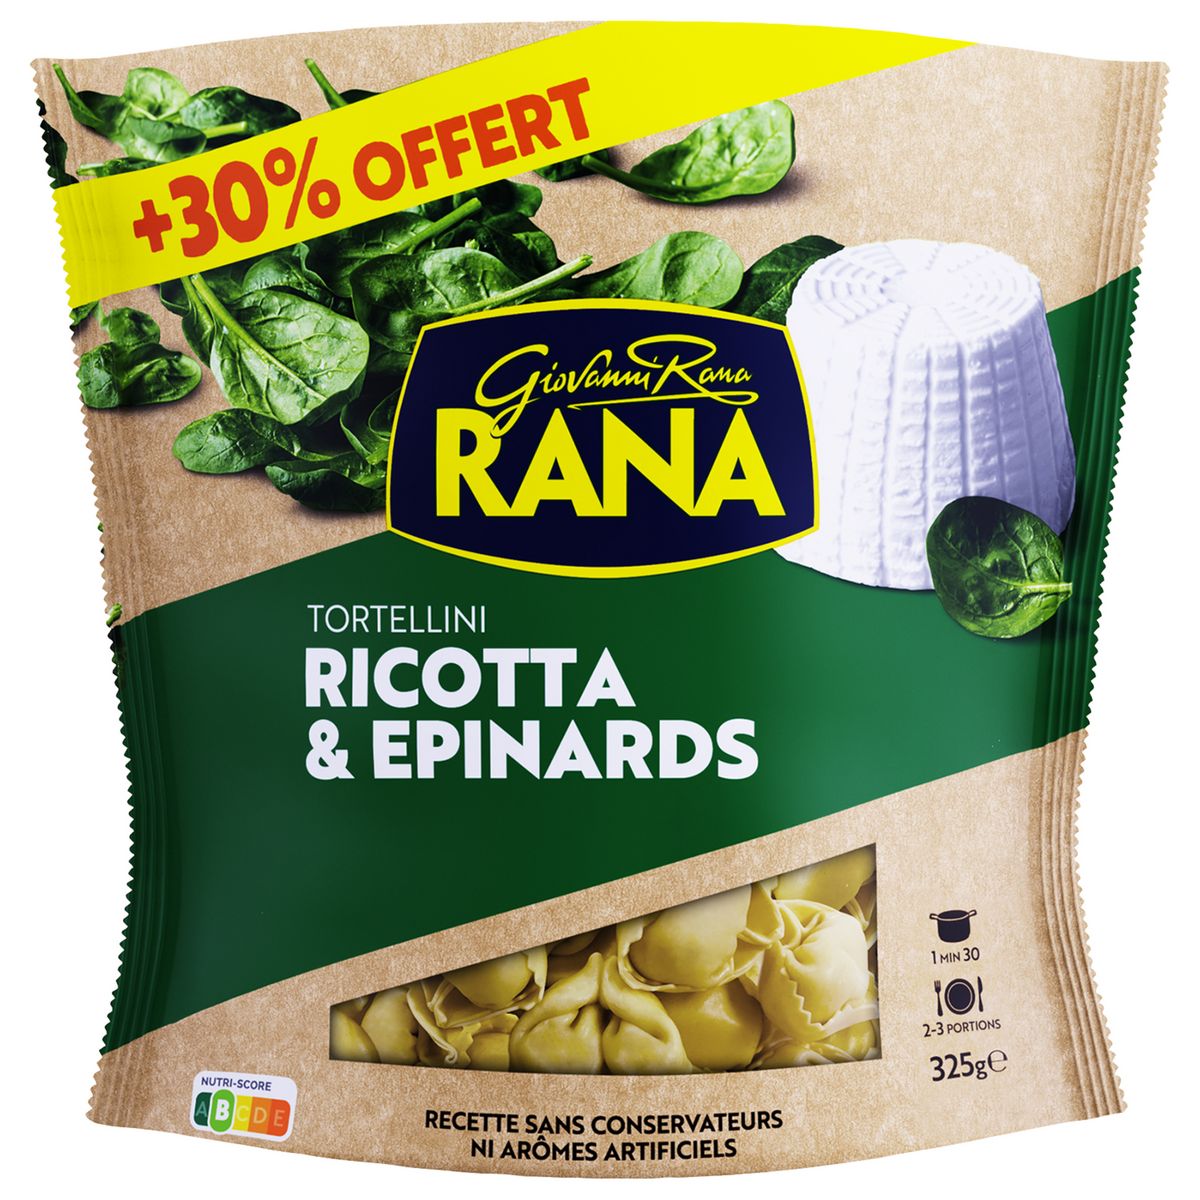 RANA Tortellini ricotta et épinards 2-3 portions 250g + 75g offerts